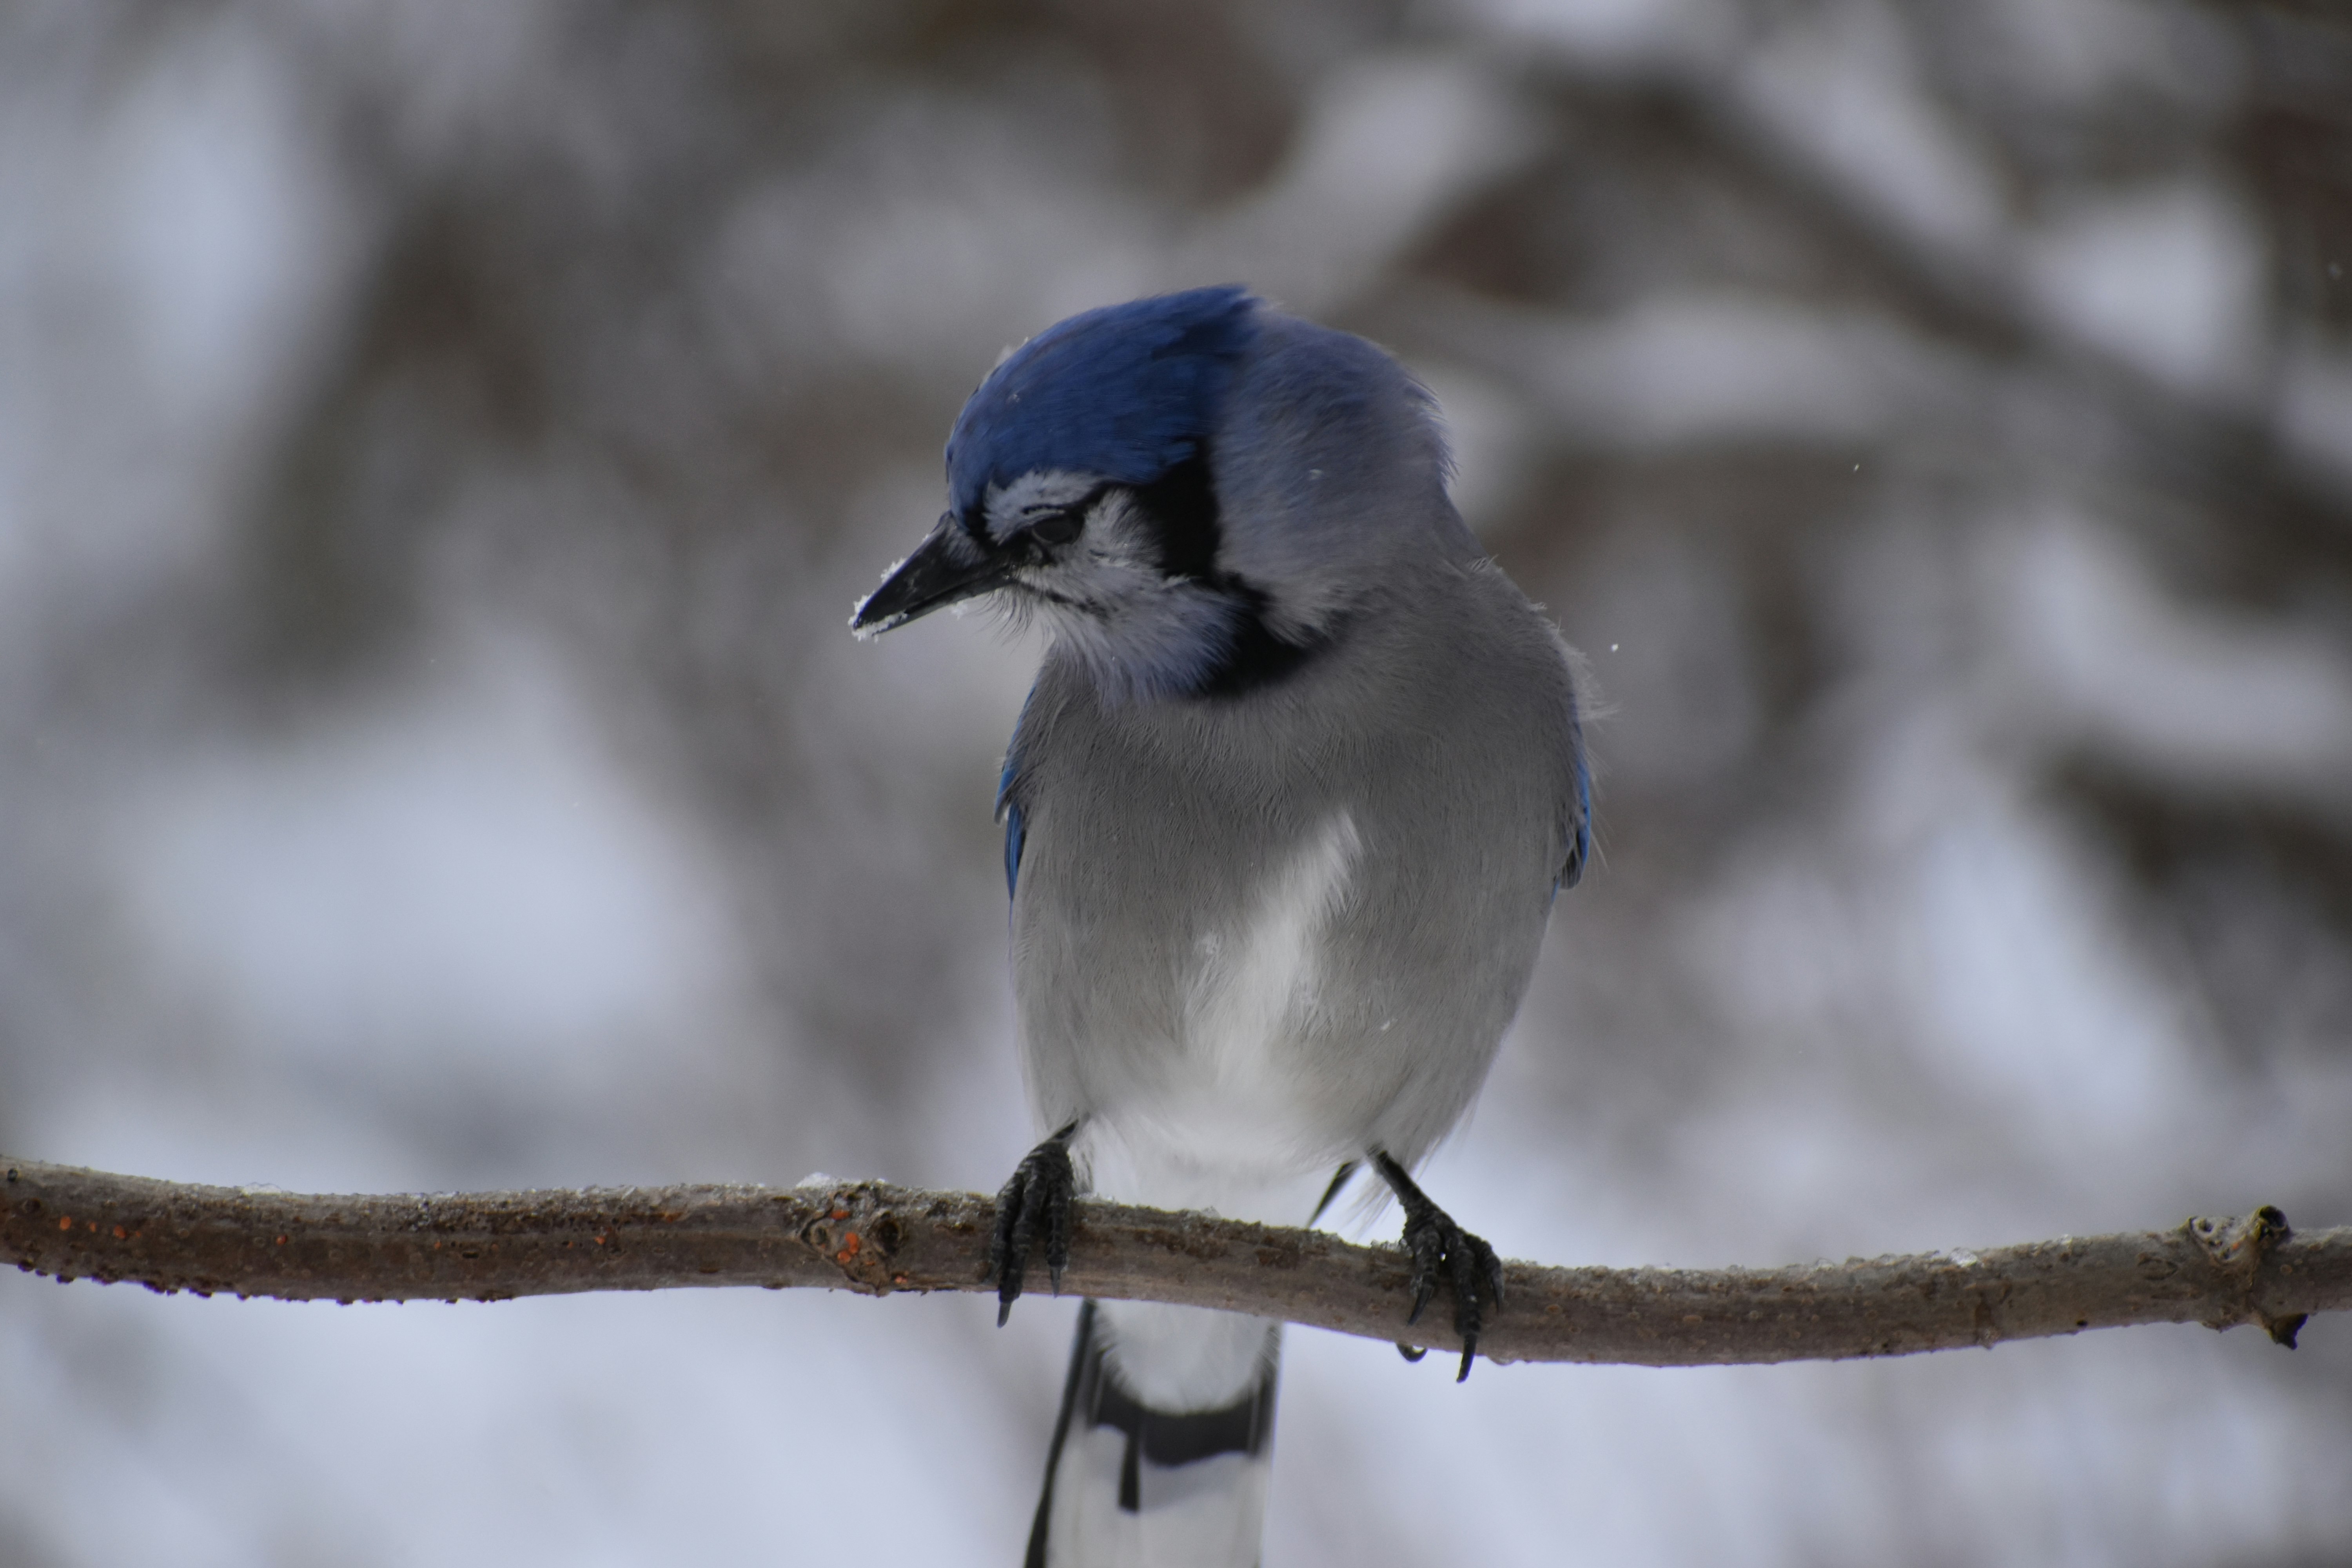 A blue jay on a branch, Sainte-Apolline, Québec, Canada